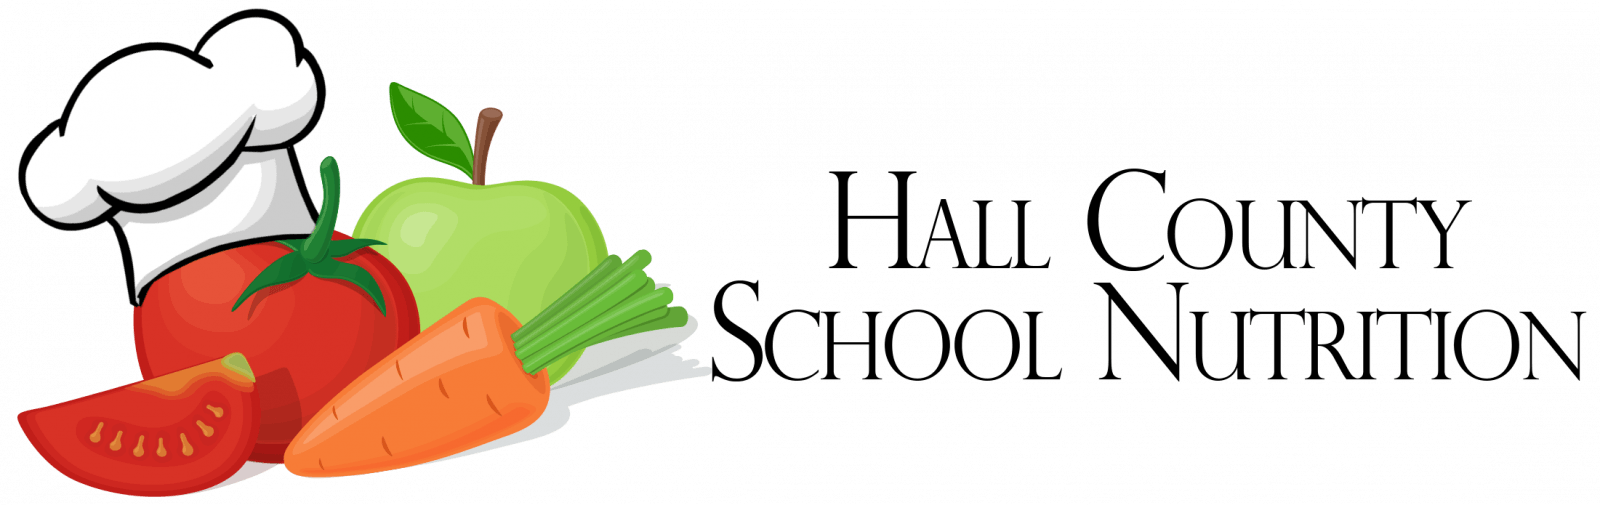 Hall County School Nutrition